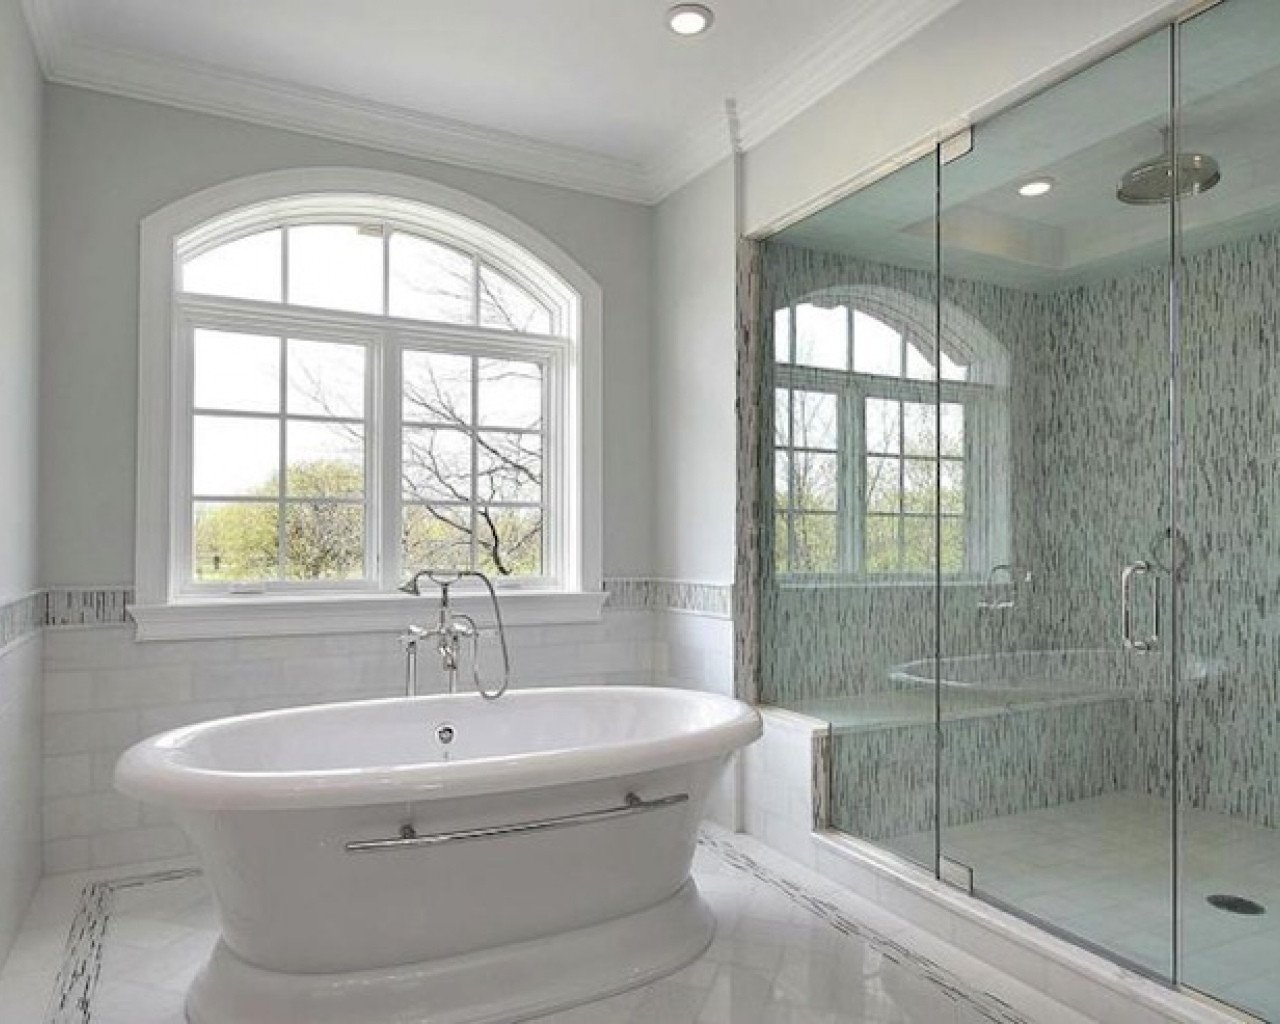 Glass Tile Bathroom Ideas
 27 nice pictures of bathroom glass tile accent ideas